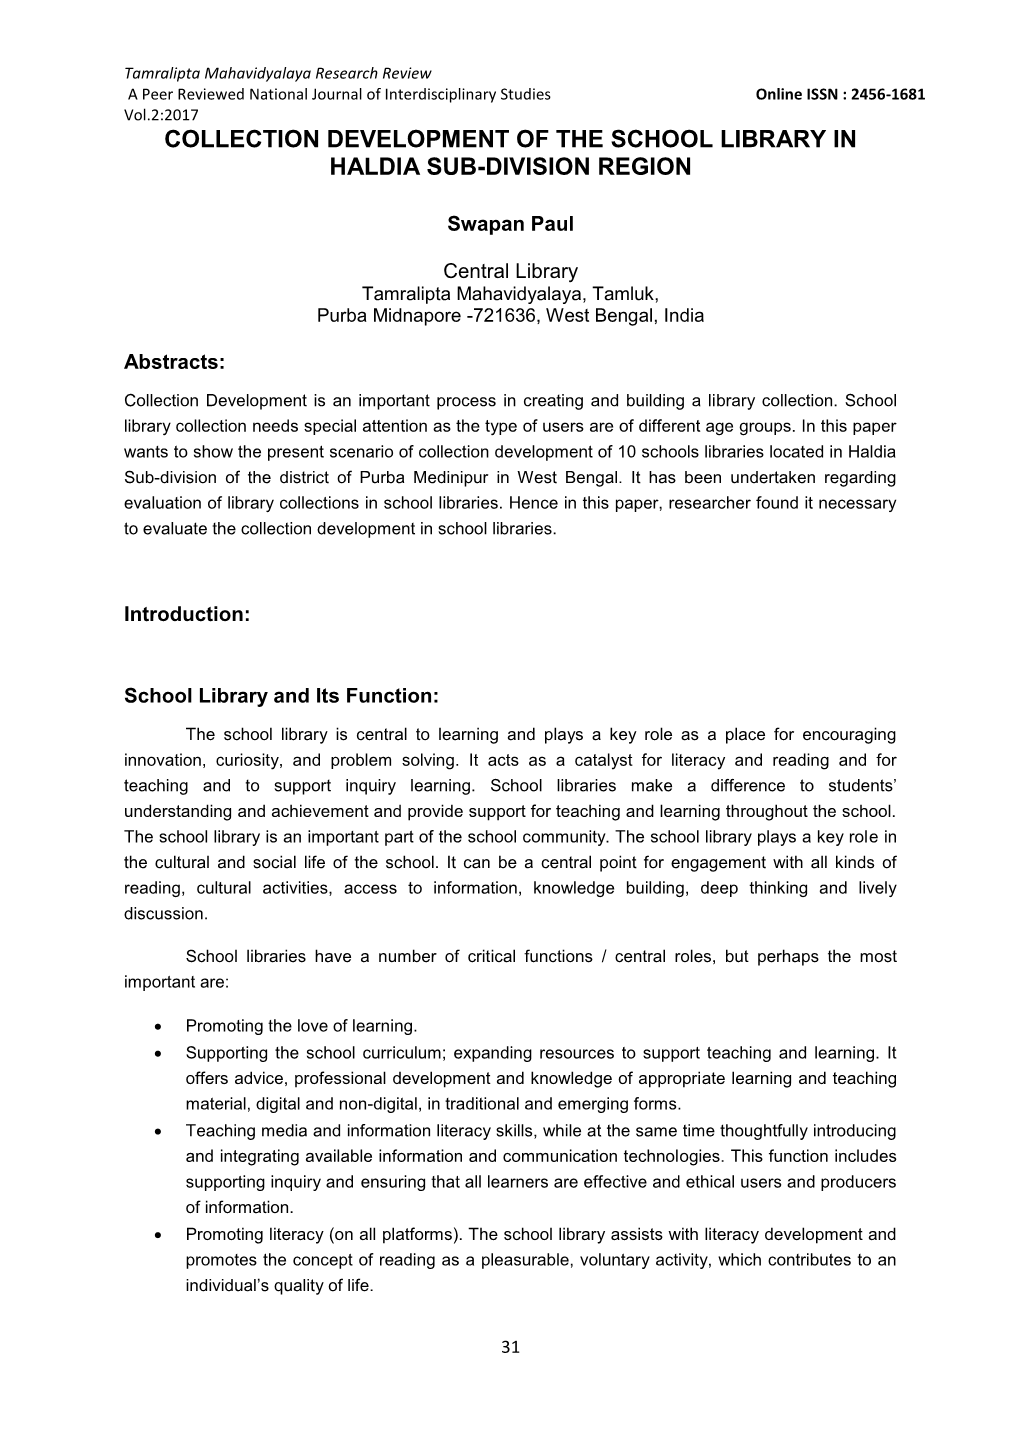 Collection Development of the School Library in Haldia Sub-Division Region